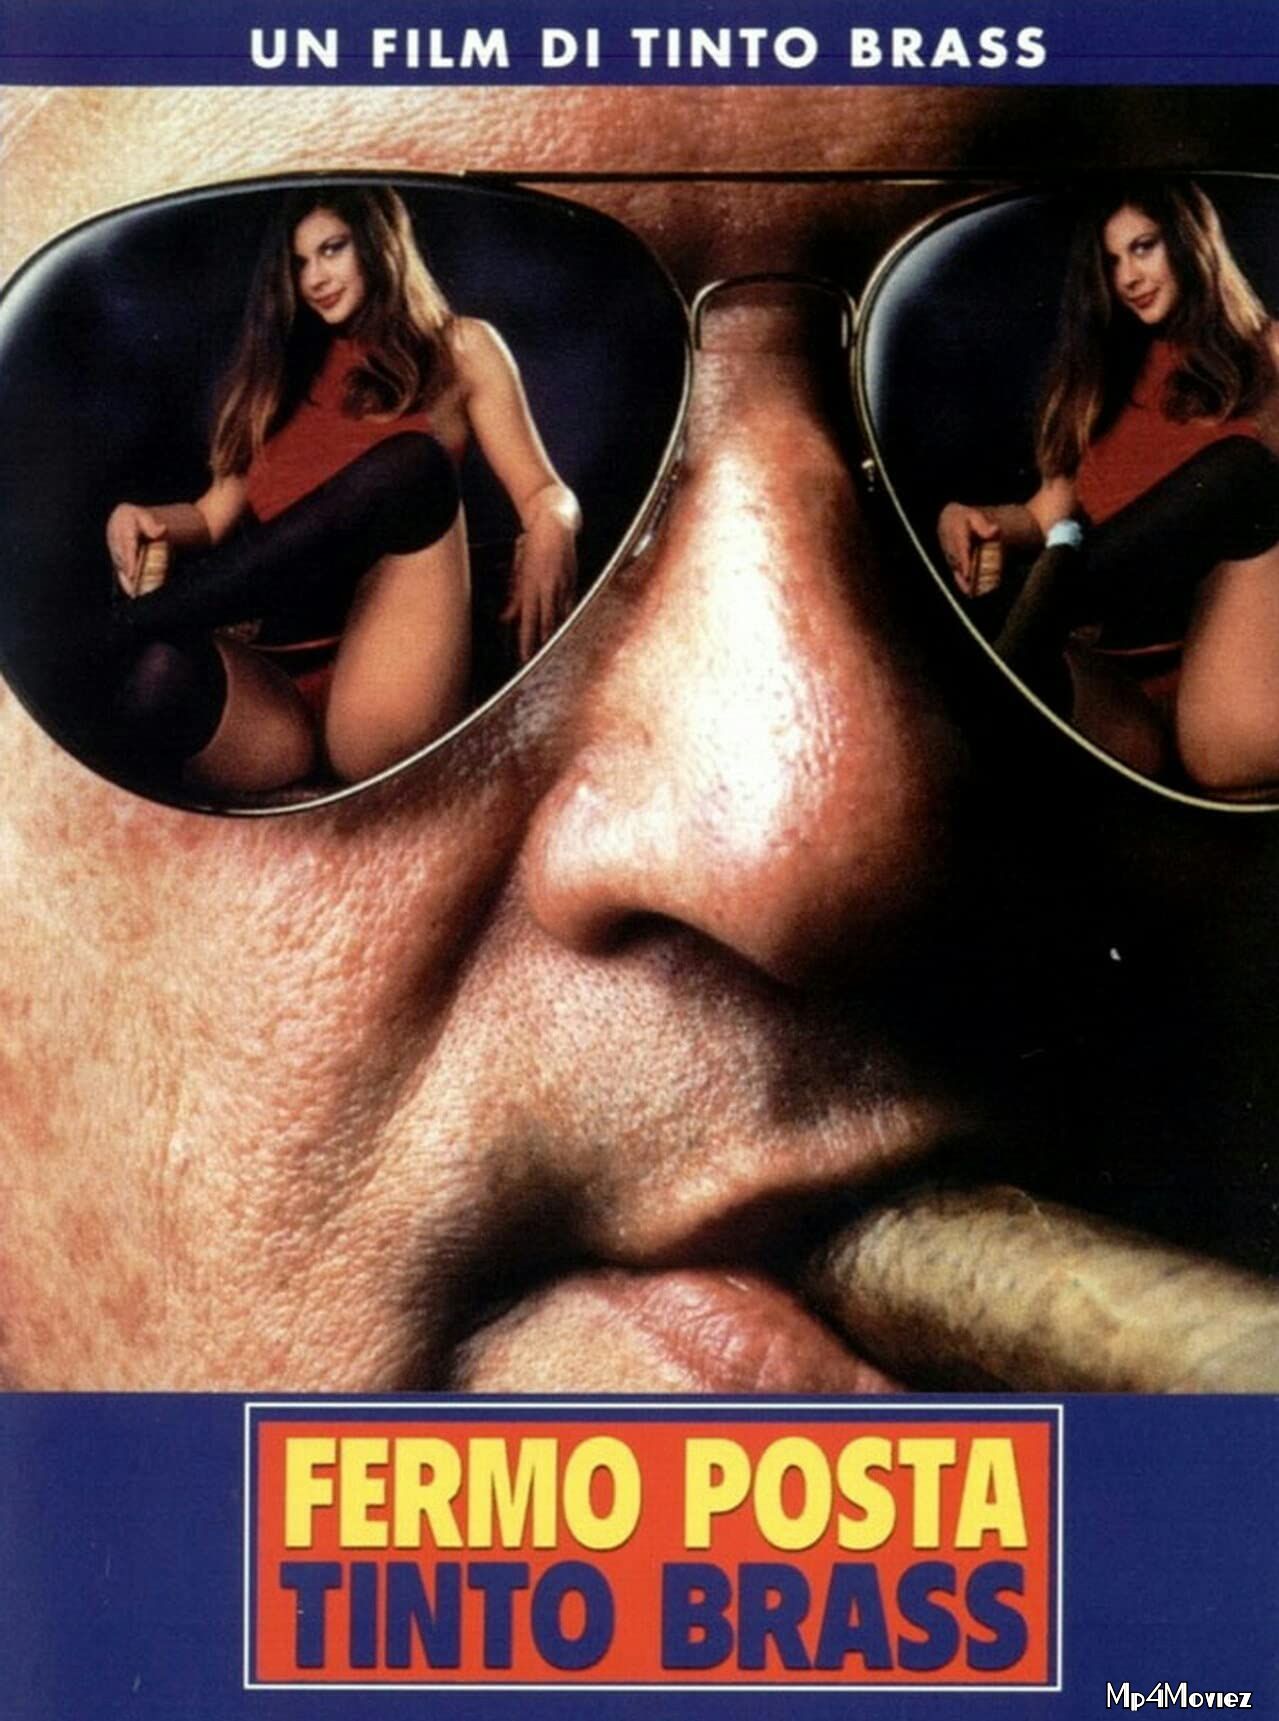 [18+] P.O. Box Tinto Brass (1995) Italina BluRay download full movie